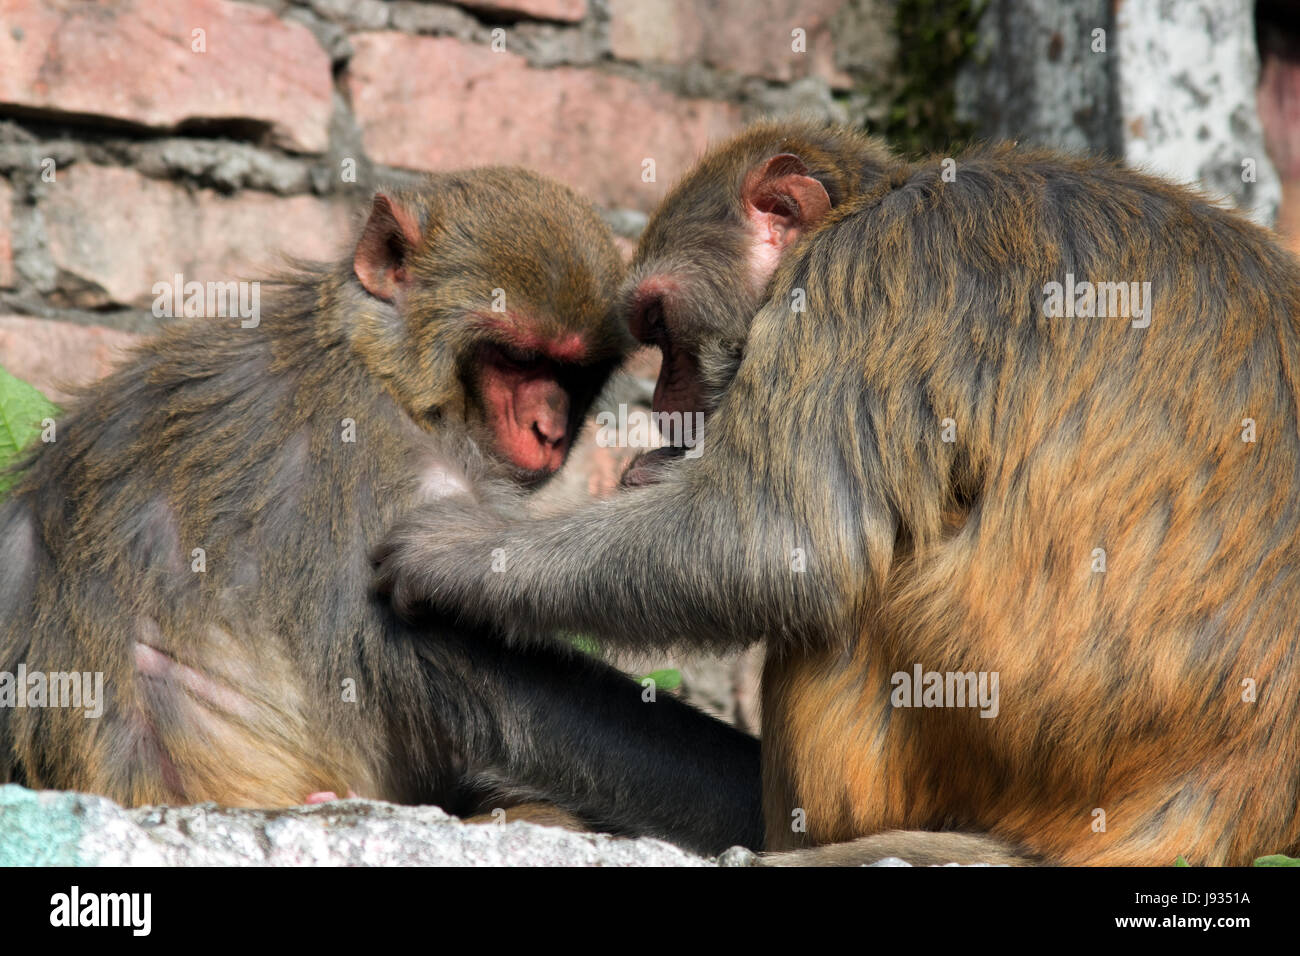 Zwei Makaken pflegen einander nahe Observatory Hill, West Bengal Darjeeling Indien Stockfoto